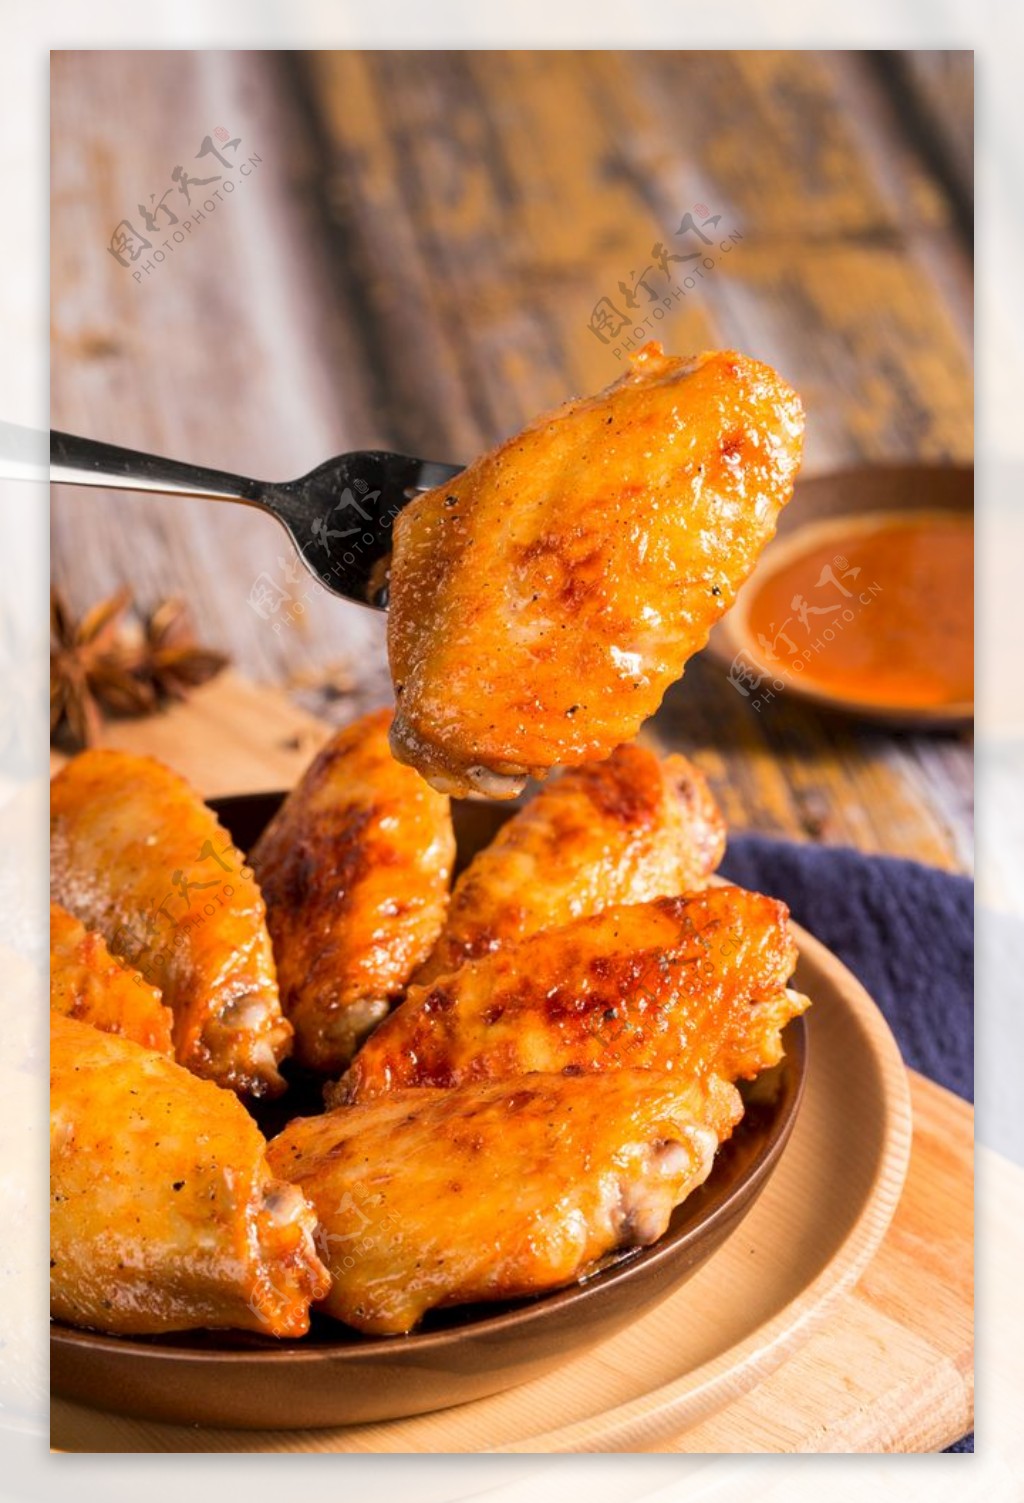 Alvina's Baking Journey ~~: Baked Honey Chicken Wing 香烤蜜糖鸡翅膀。